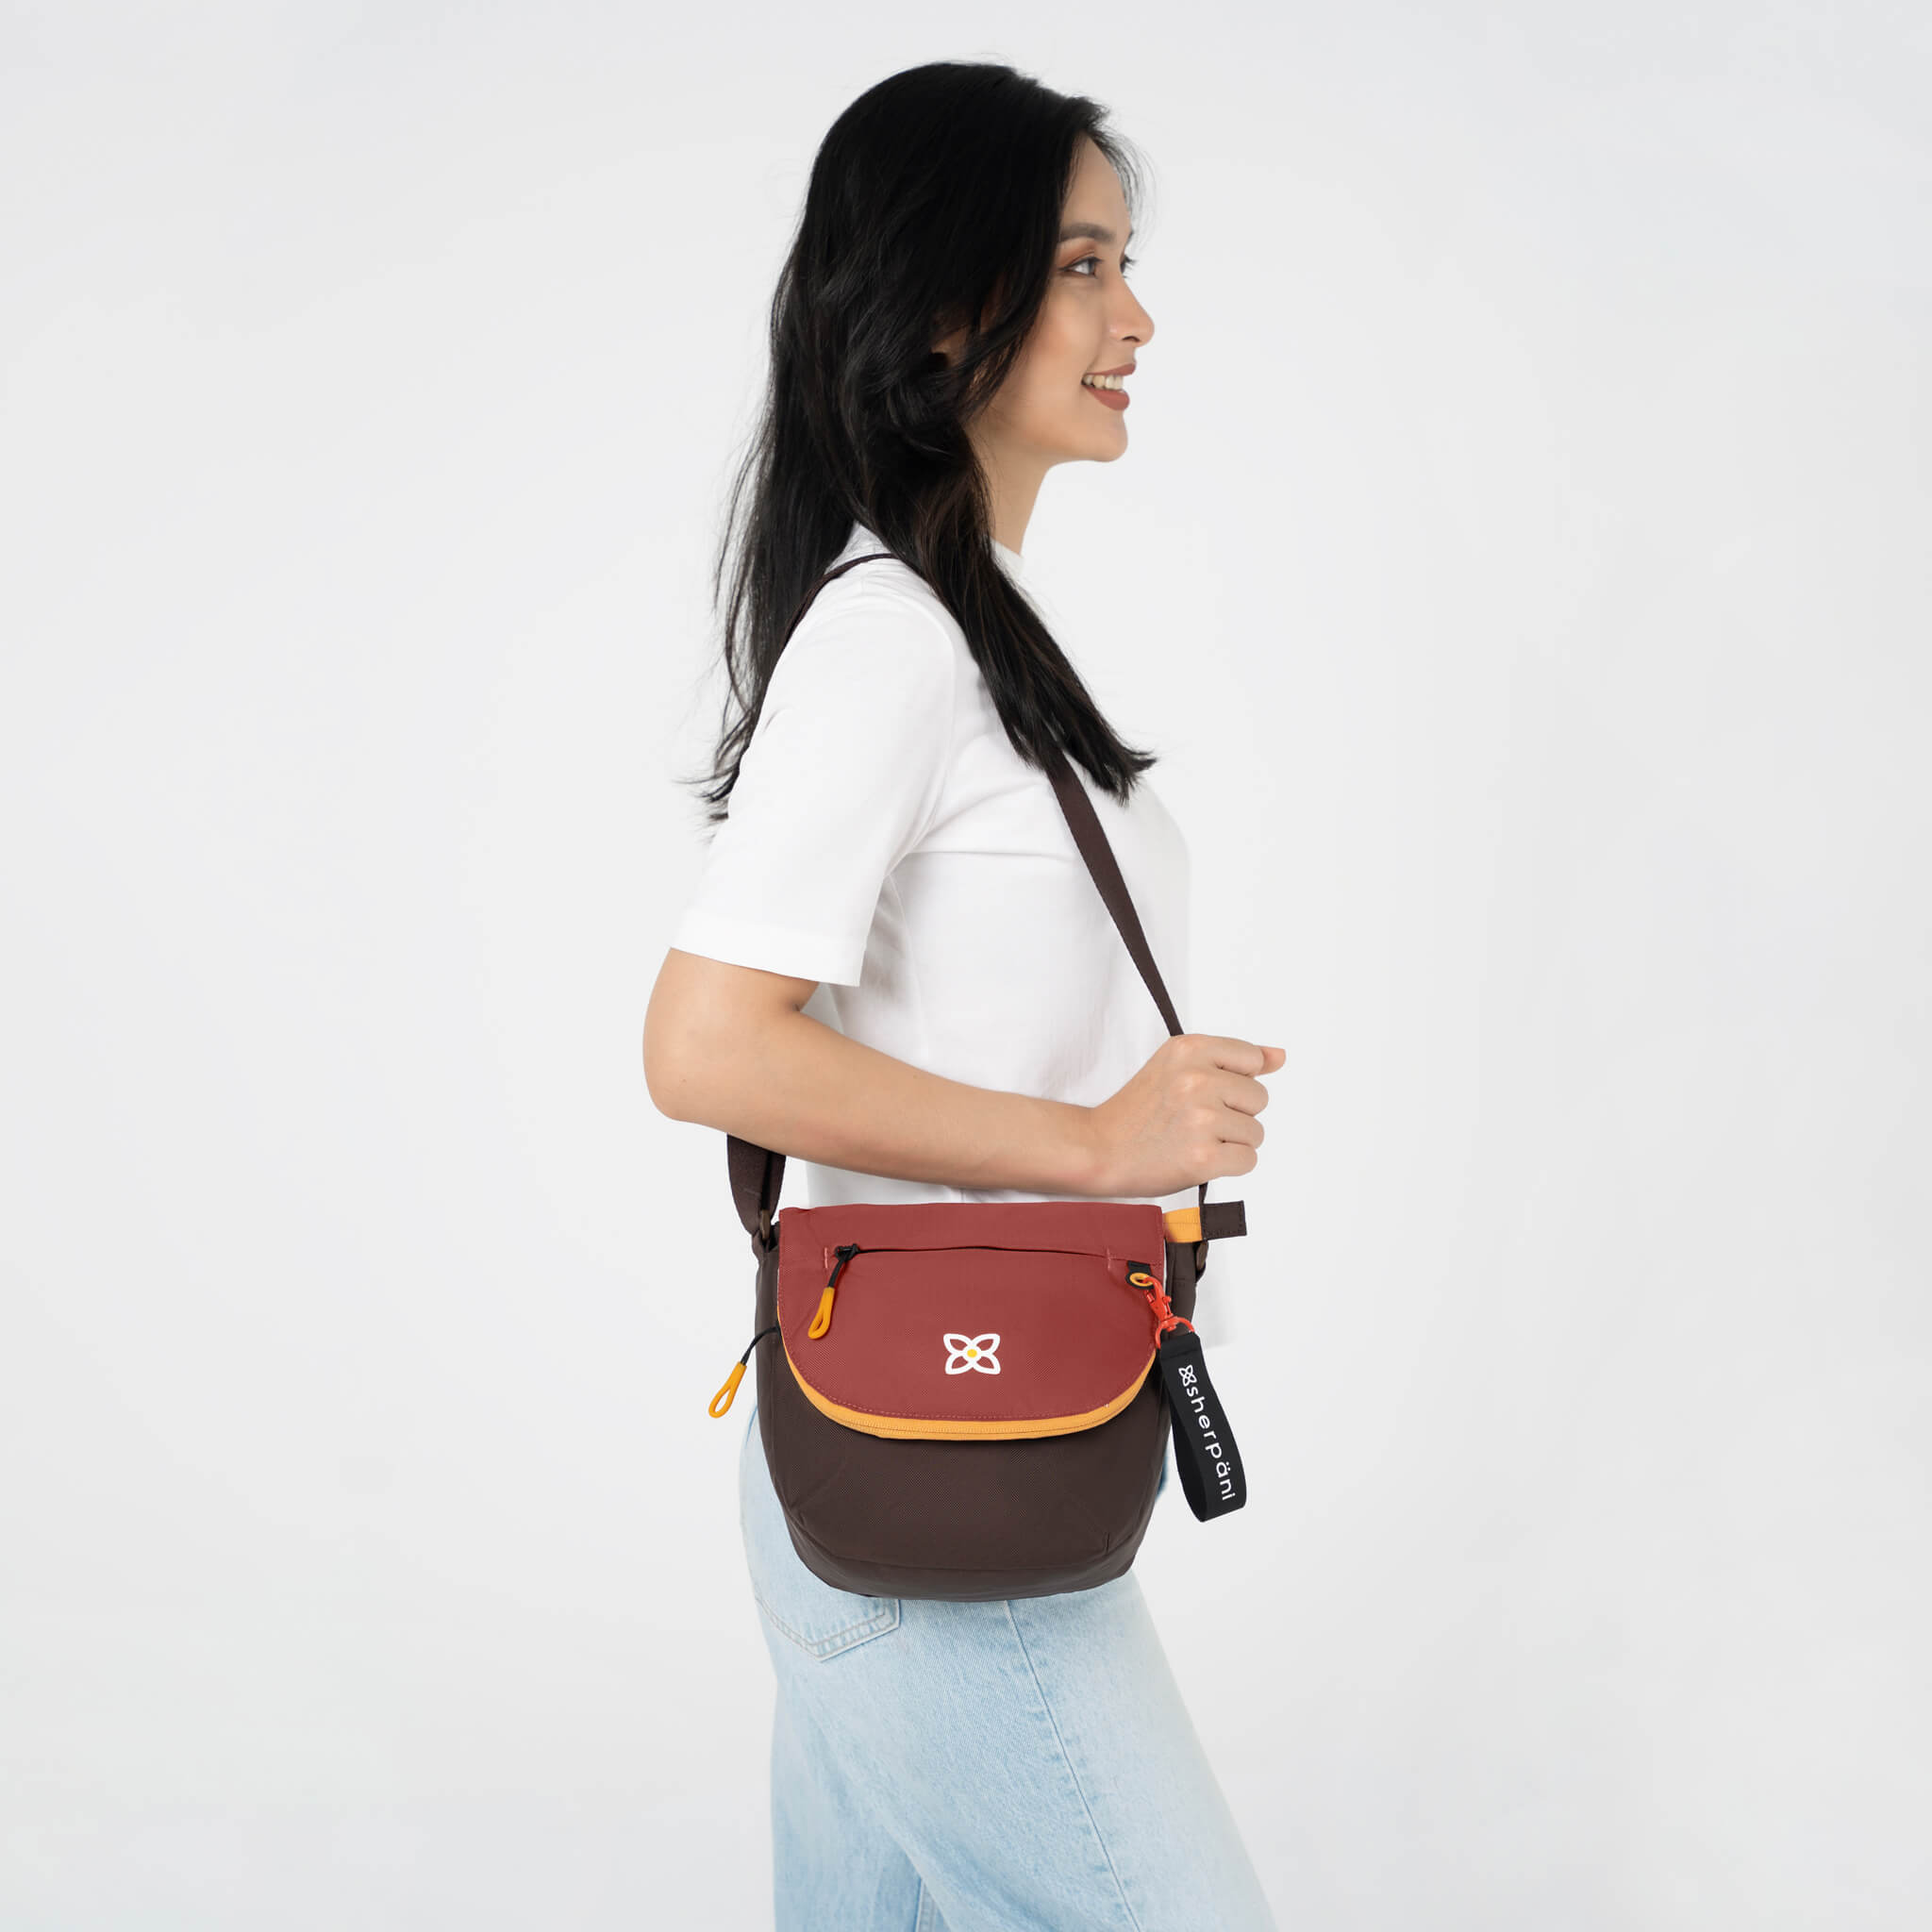 Monogram Shoulder Bag – BONIA International